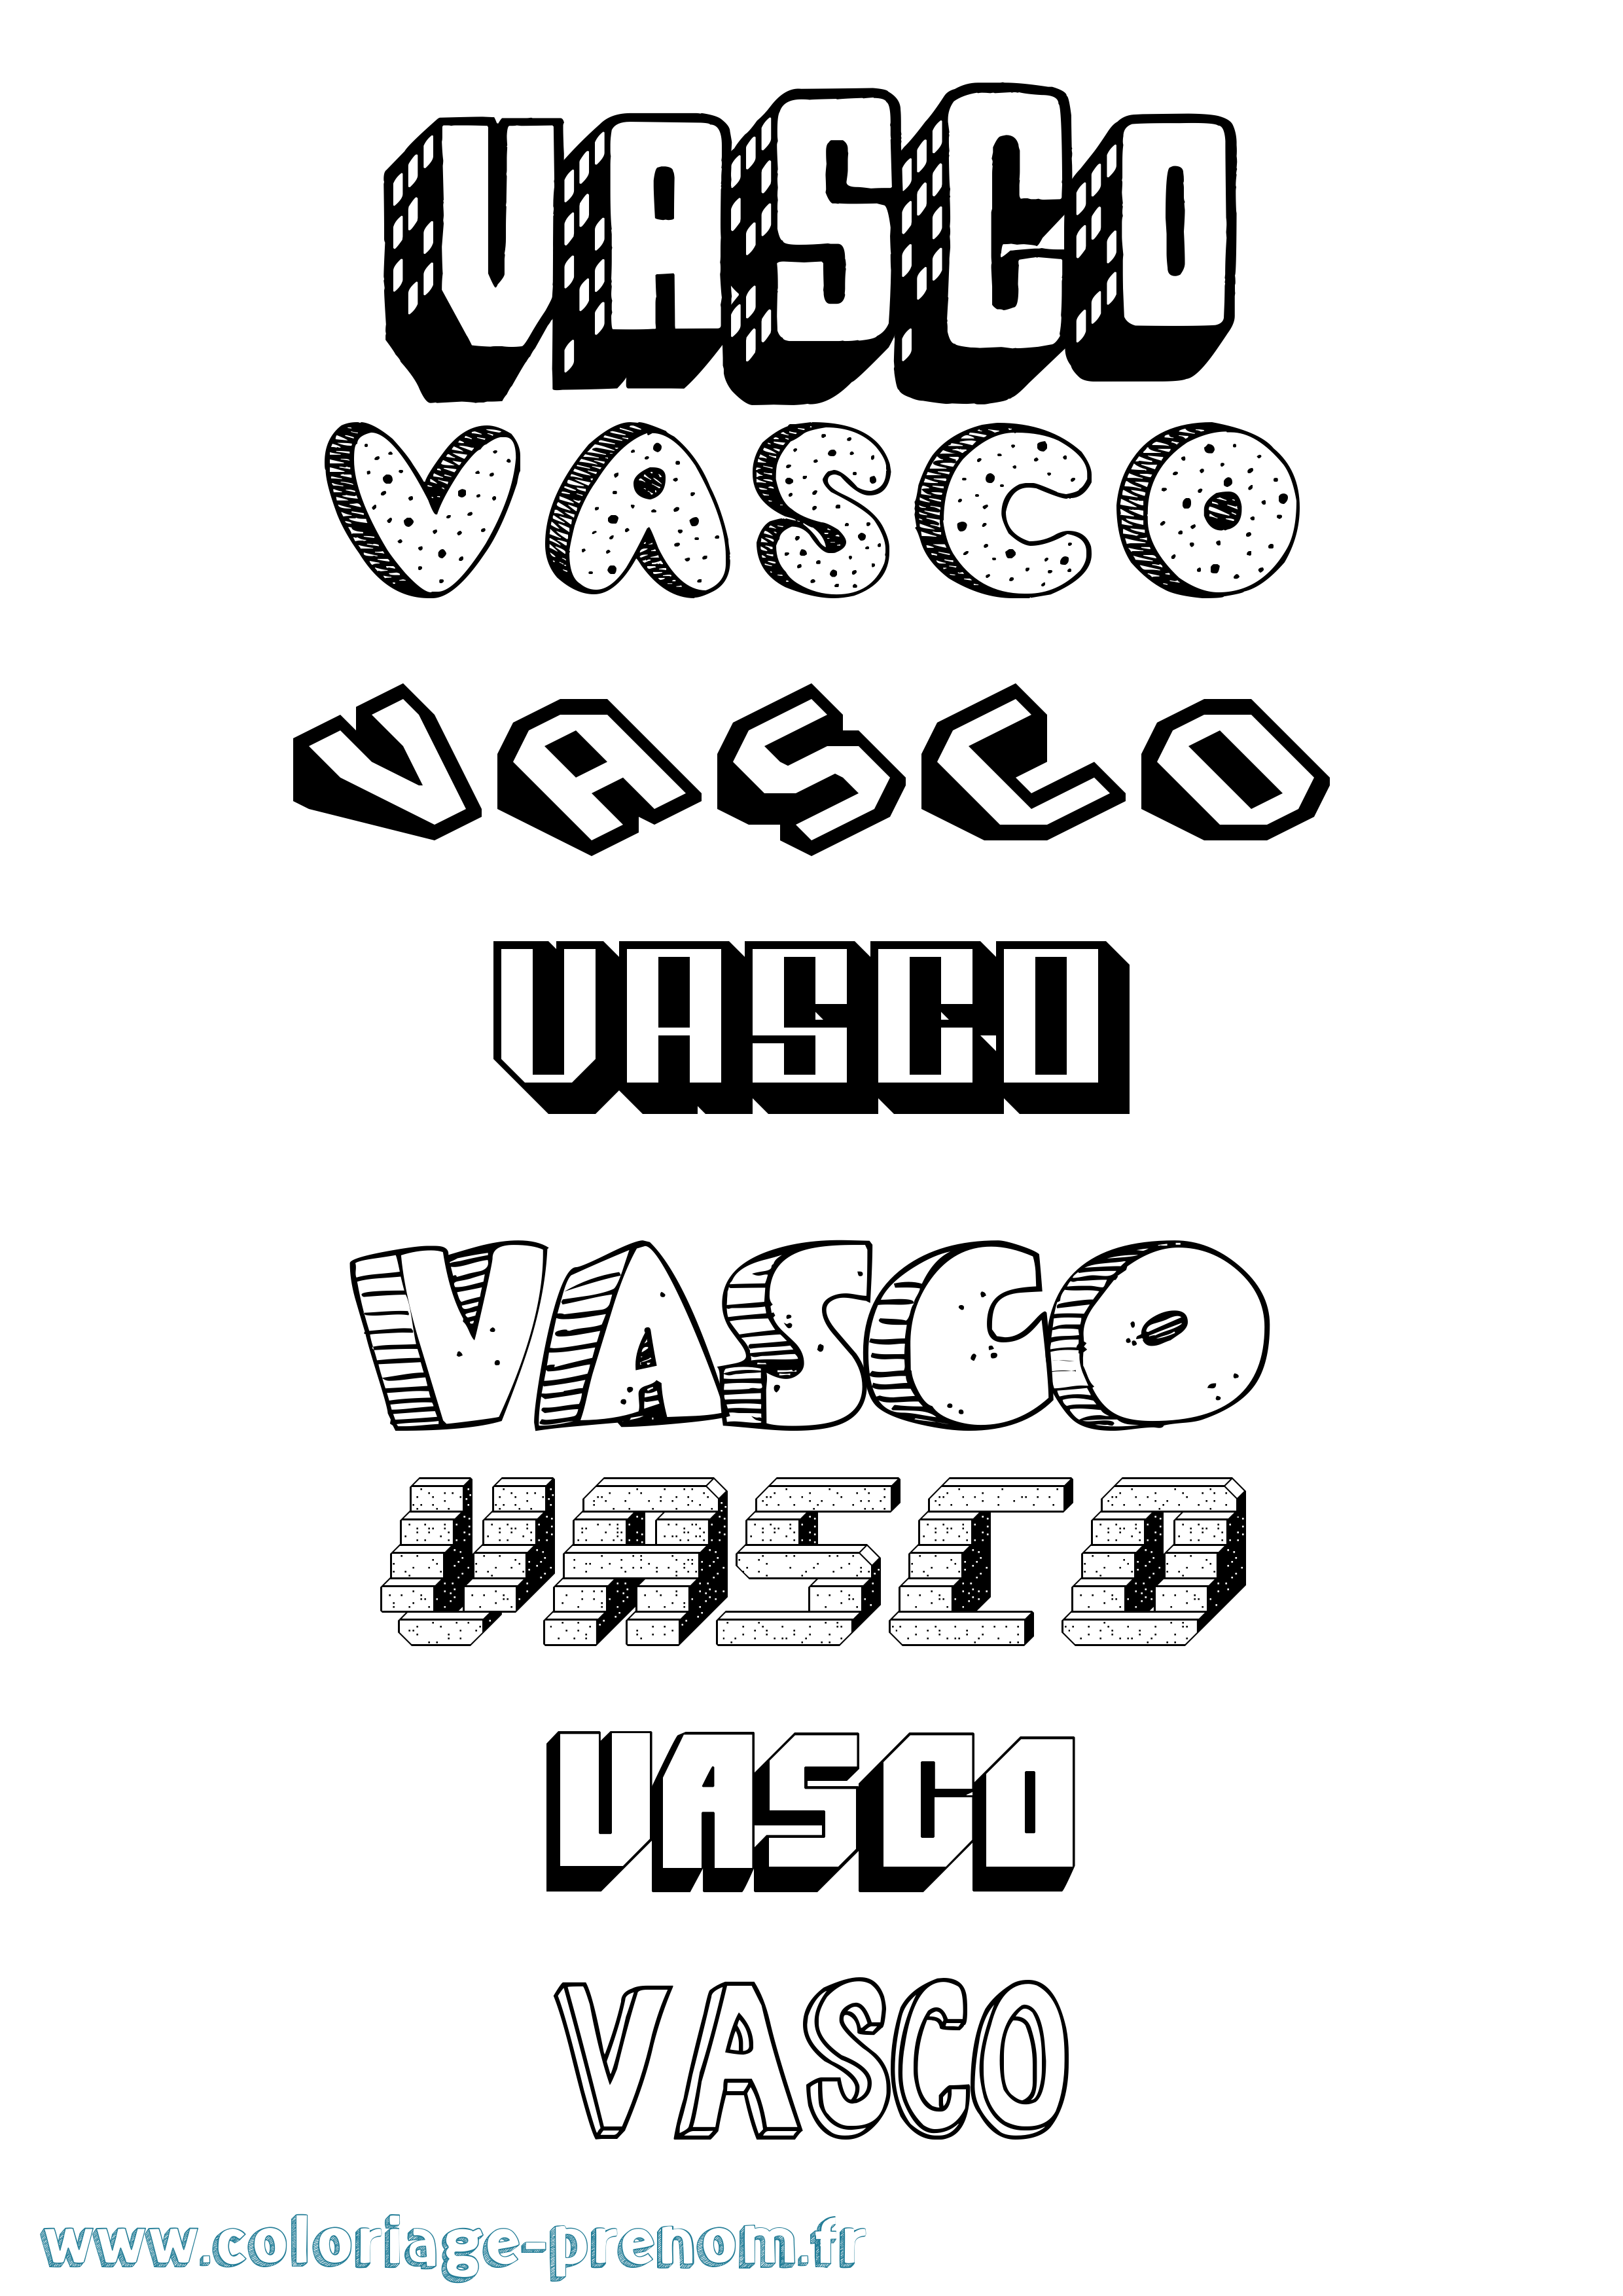 Coloriage prénom Vasco